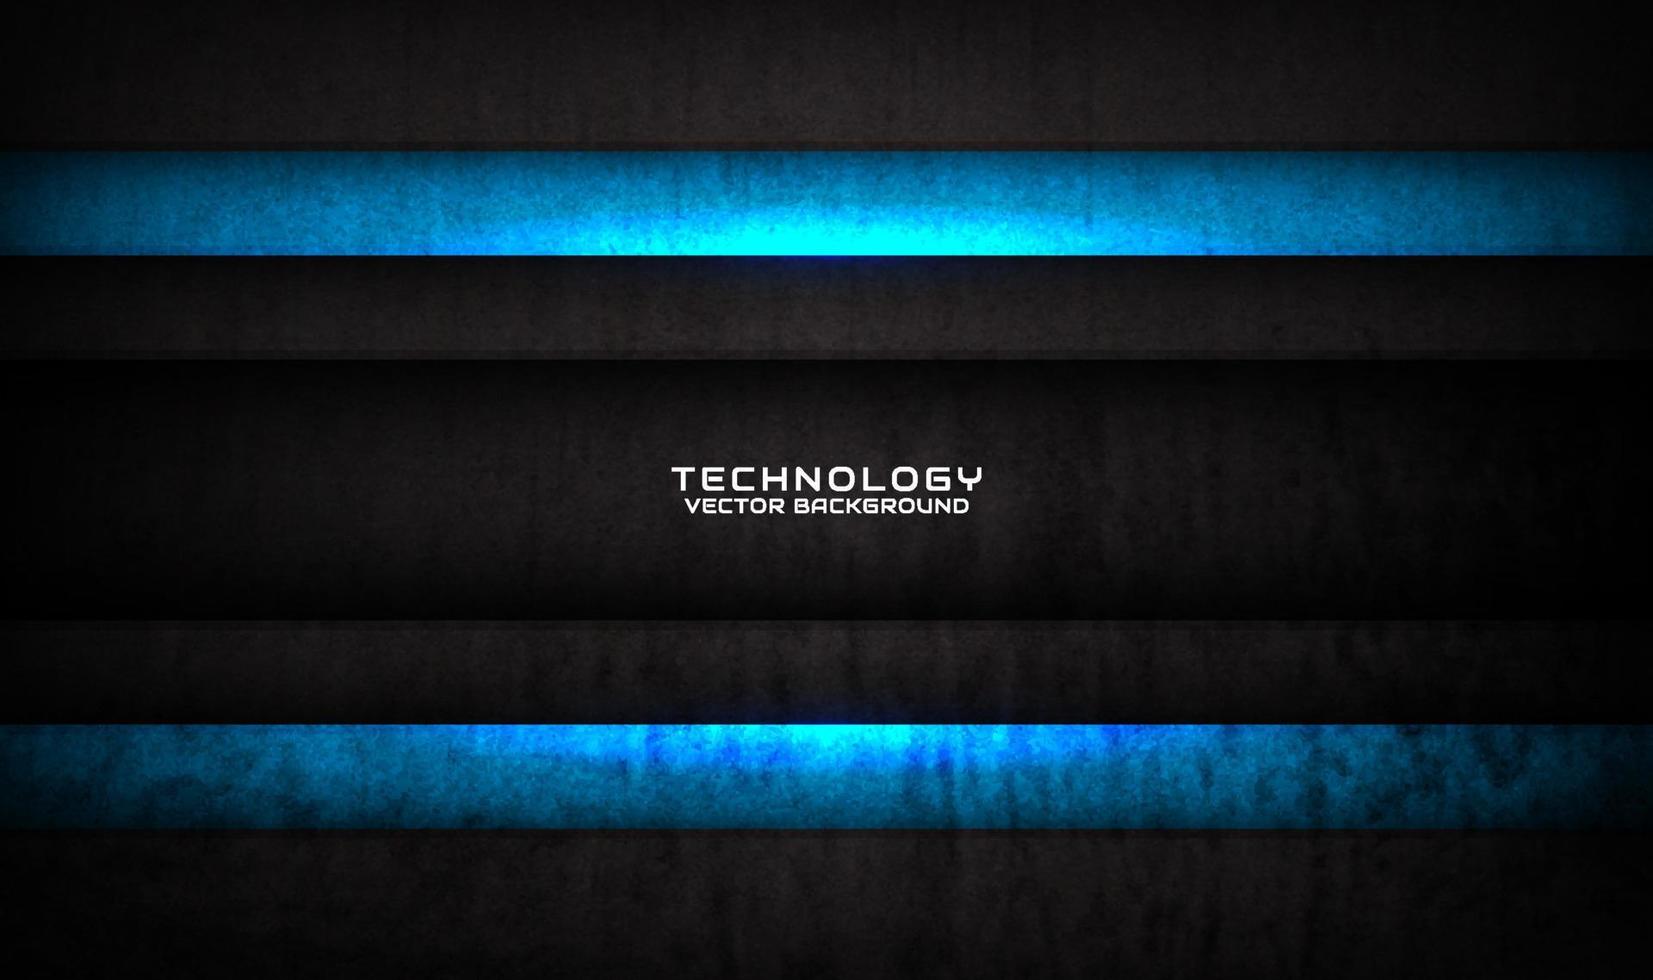 Capa de superposición de fondo abstracto de tecnología azul negra 3d en espacio oscuro con decoración de efecto de textura grunge. elemento de diseño gráfico concepto de estilo futuro para banner, volante, portada o página de inicio vector